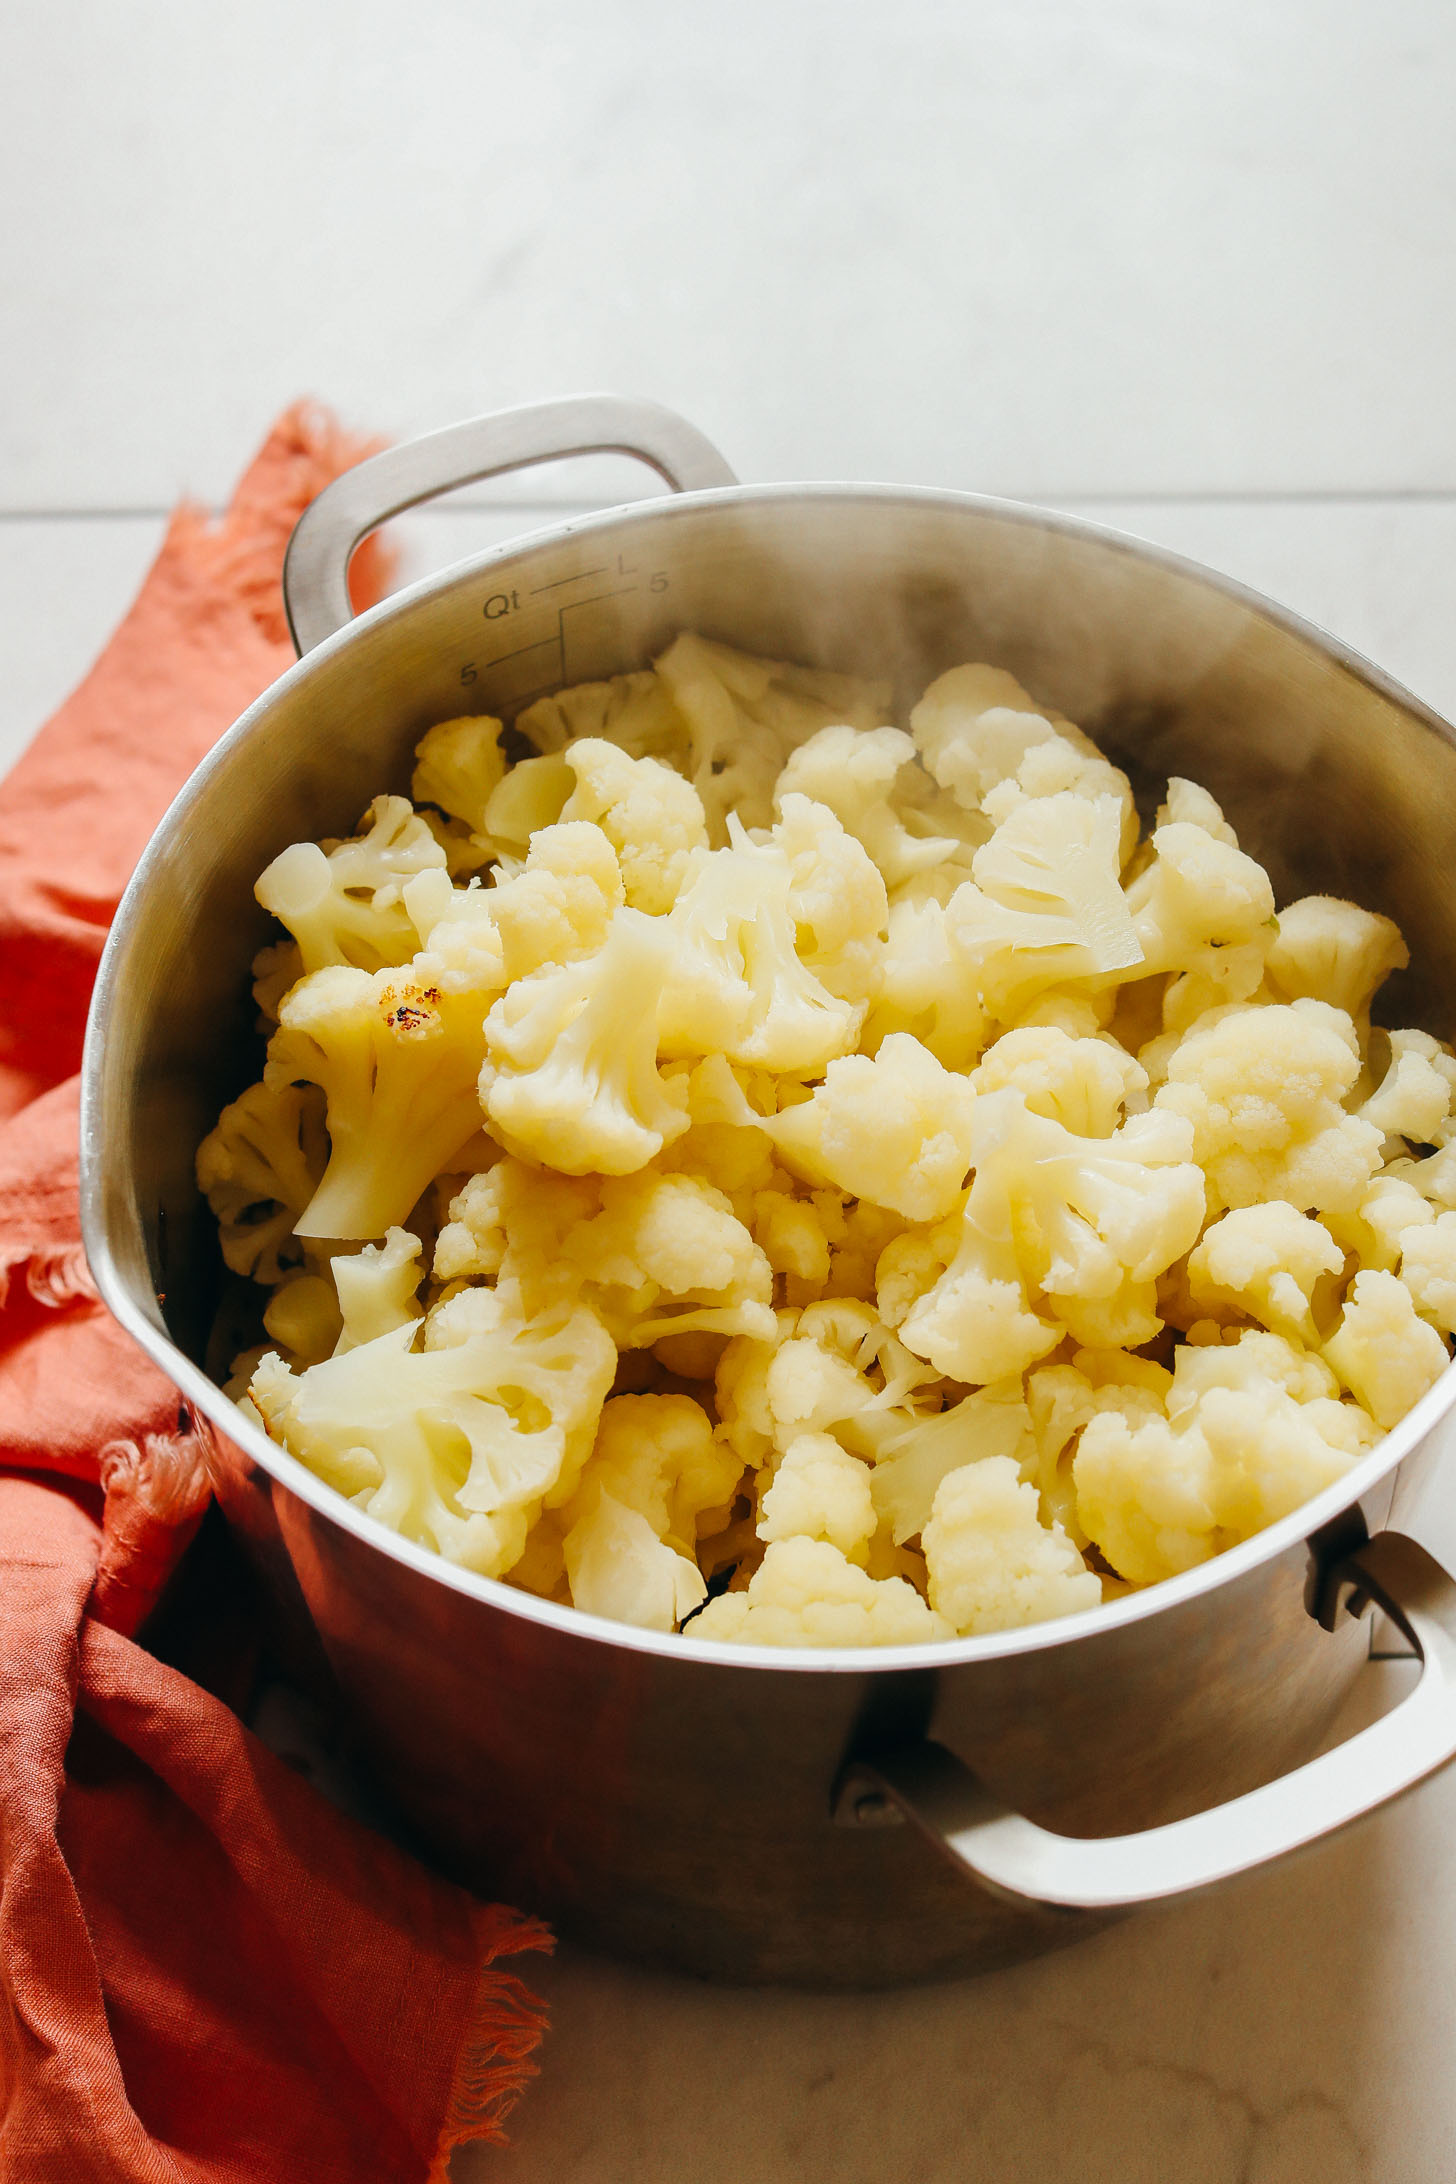 Steaming cauliflower to make homemade Garlic Mashed Cauliflower for a Thanksgiving side